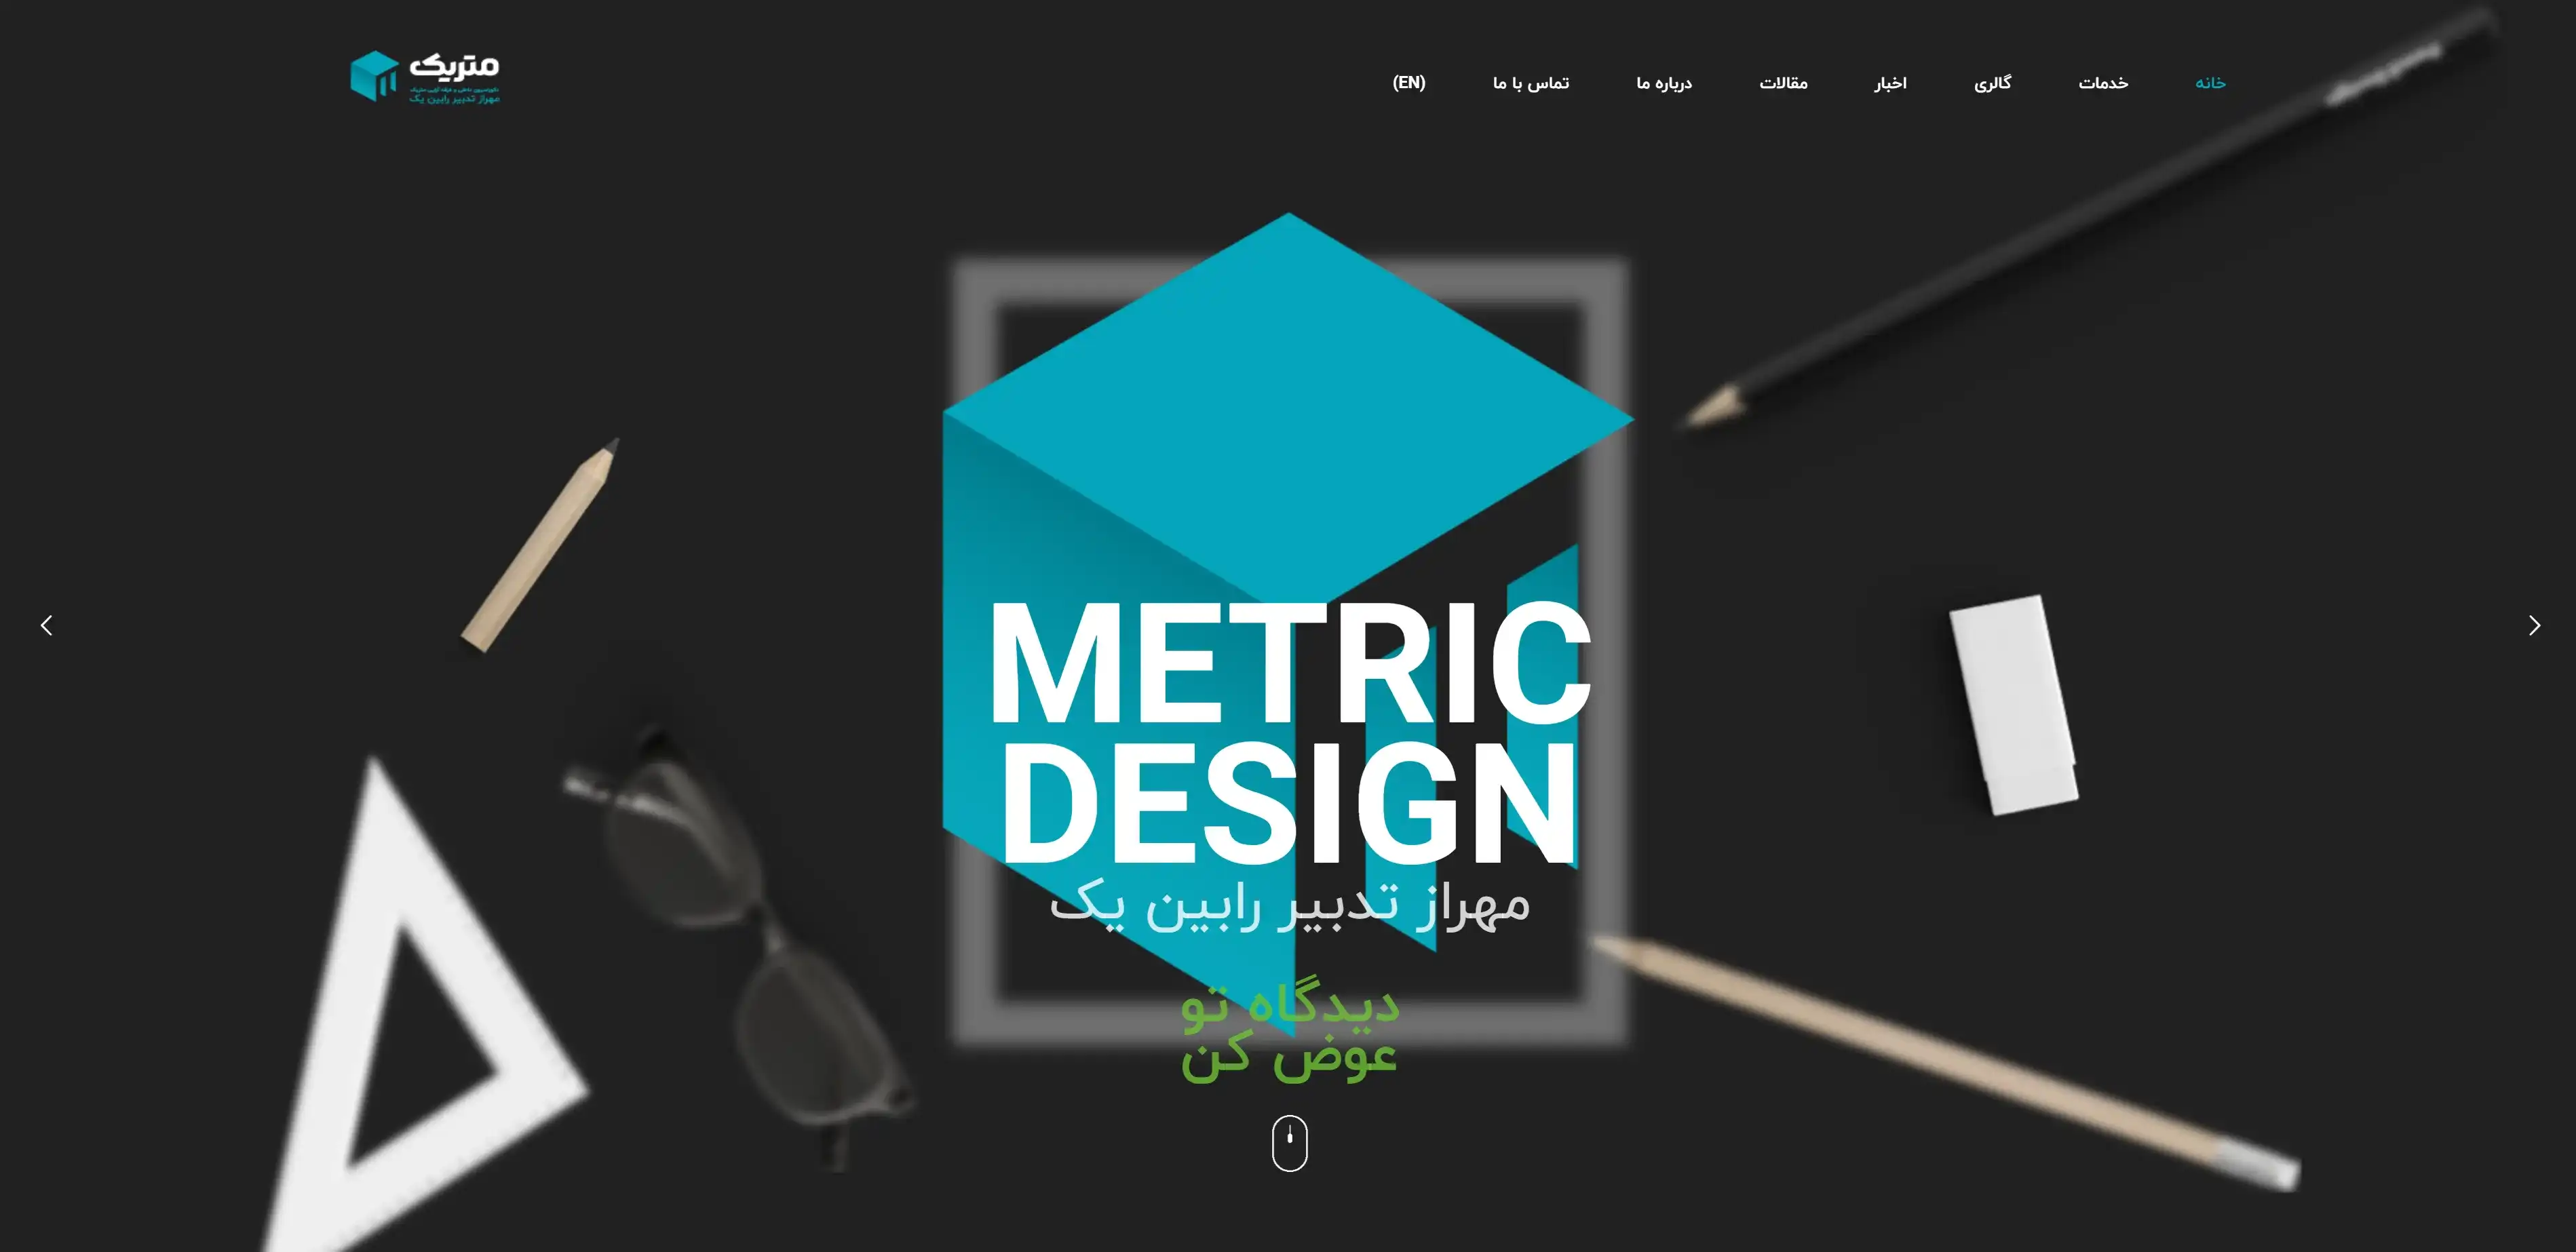 Metric Design